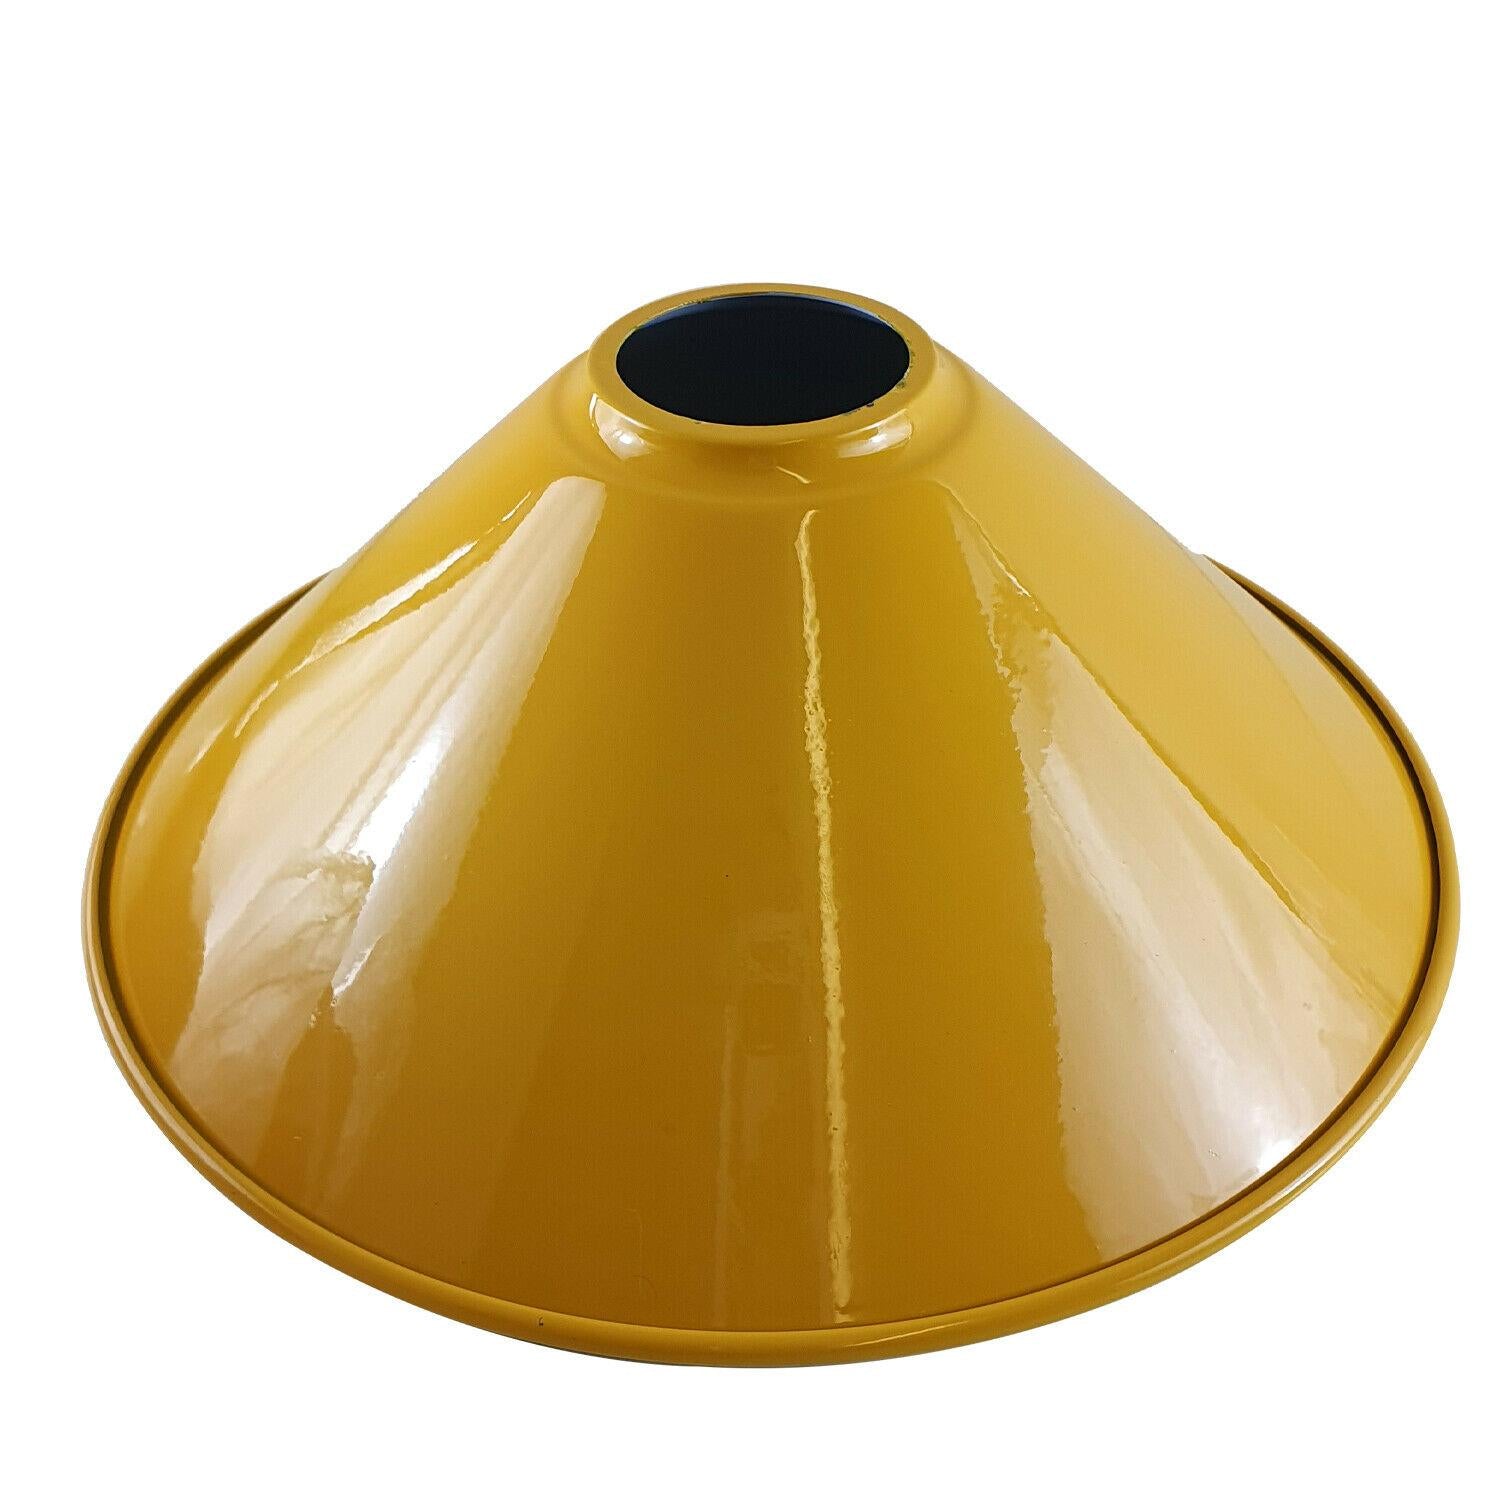 Vintage Metal Cone shaped Pendant light Lamp Shade – LEDSone UK Ltd